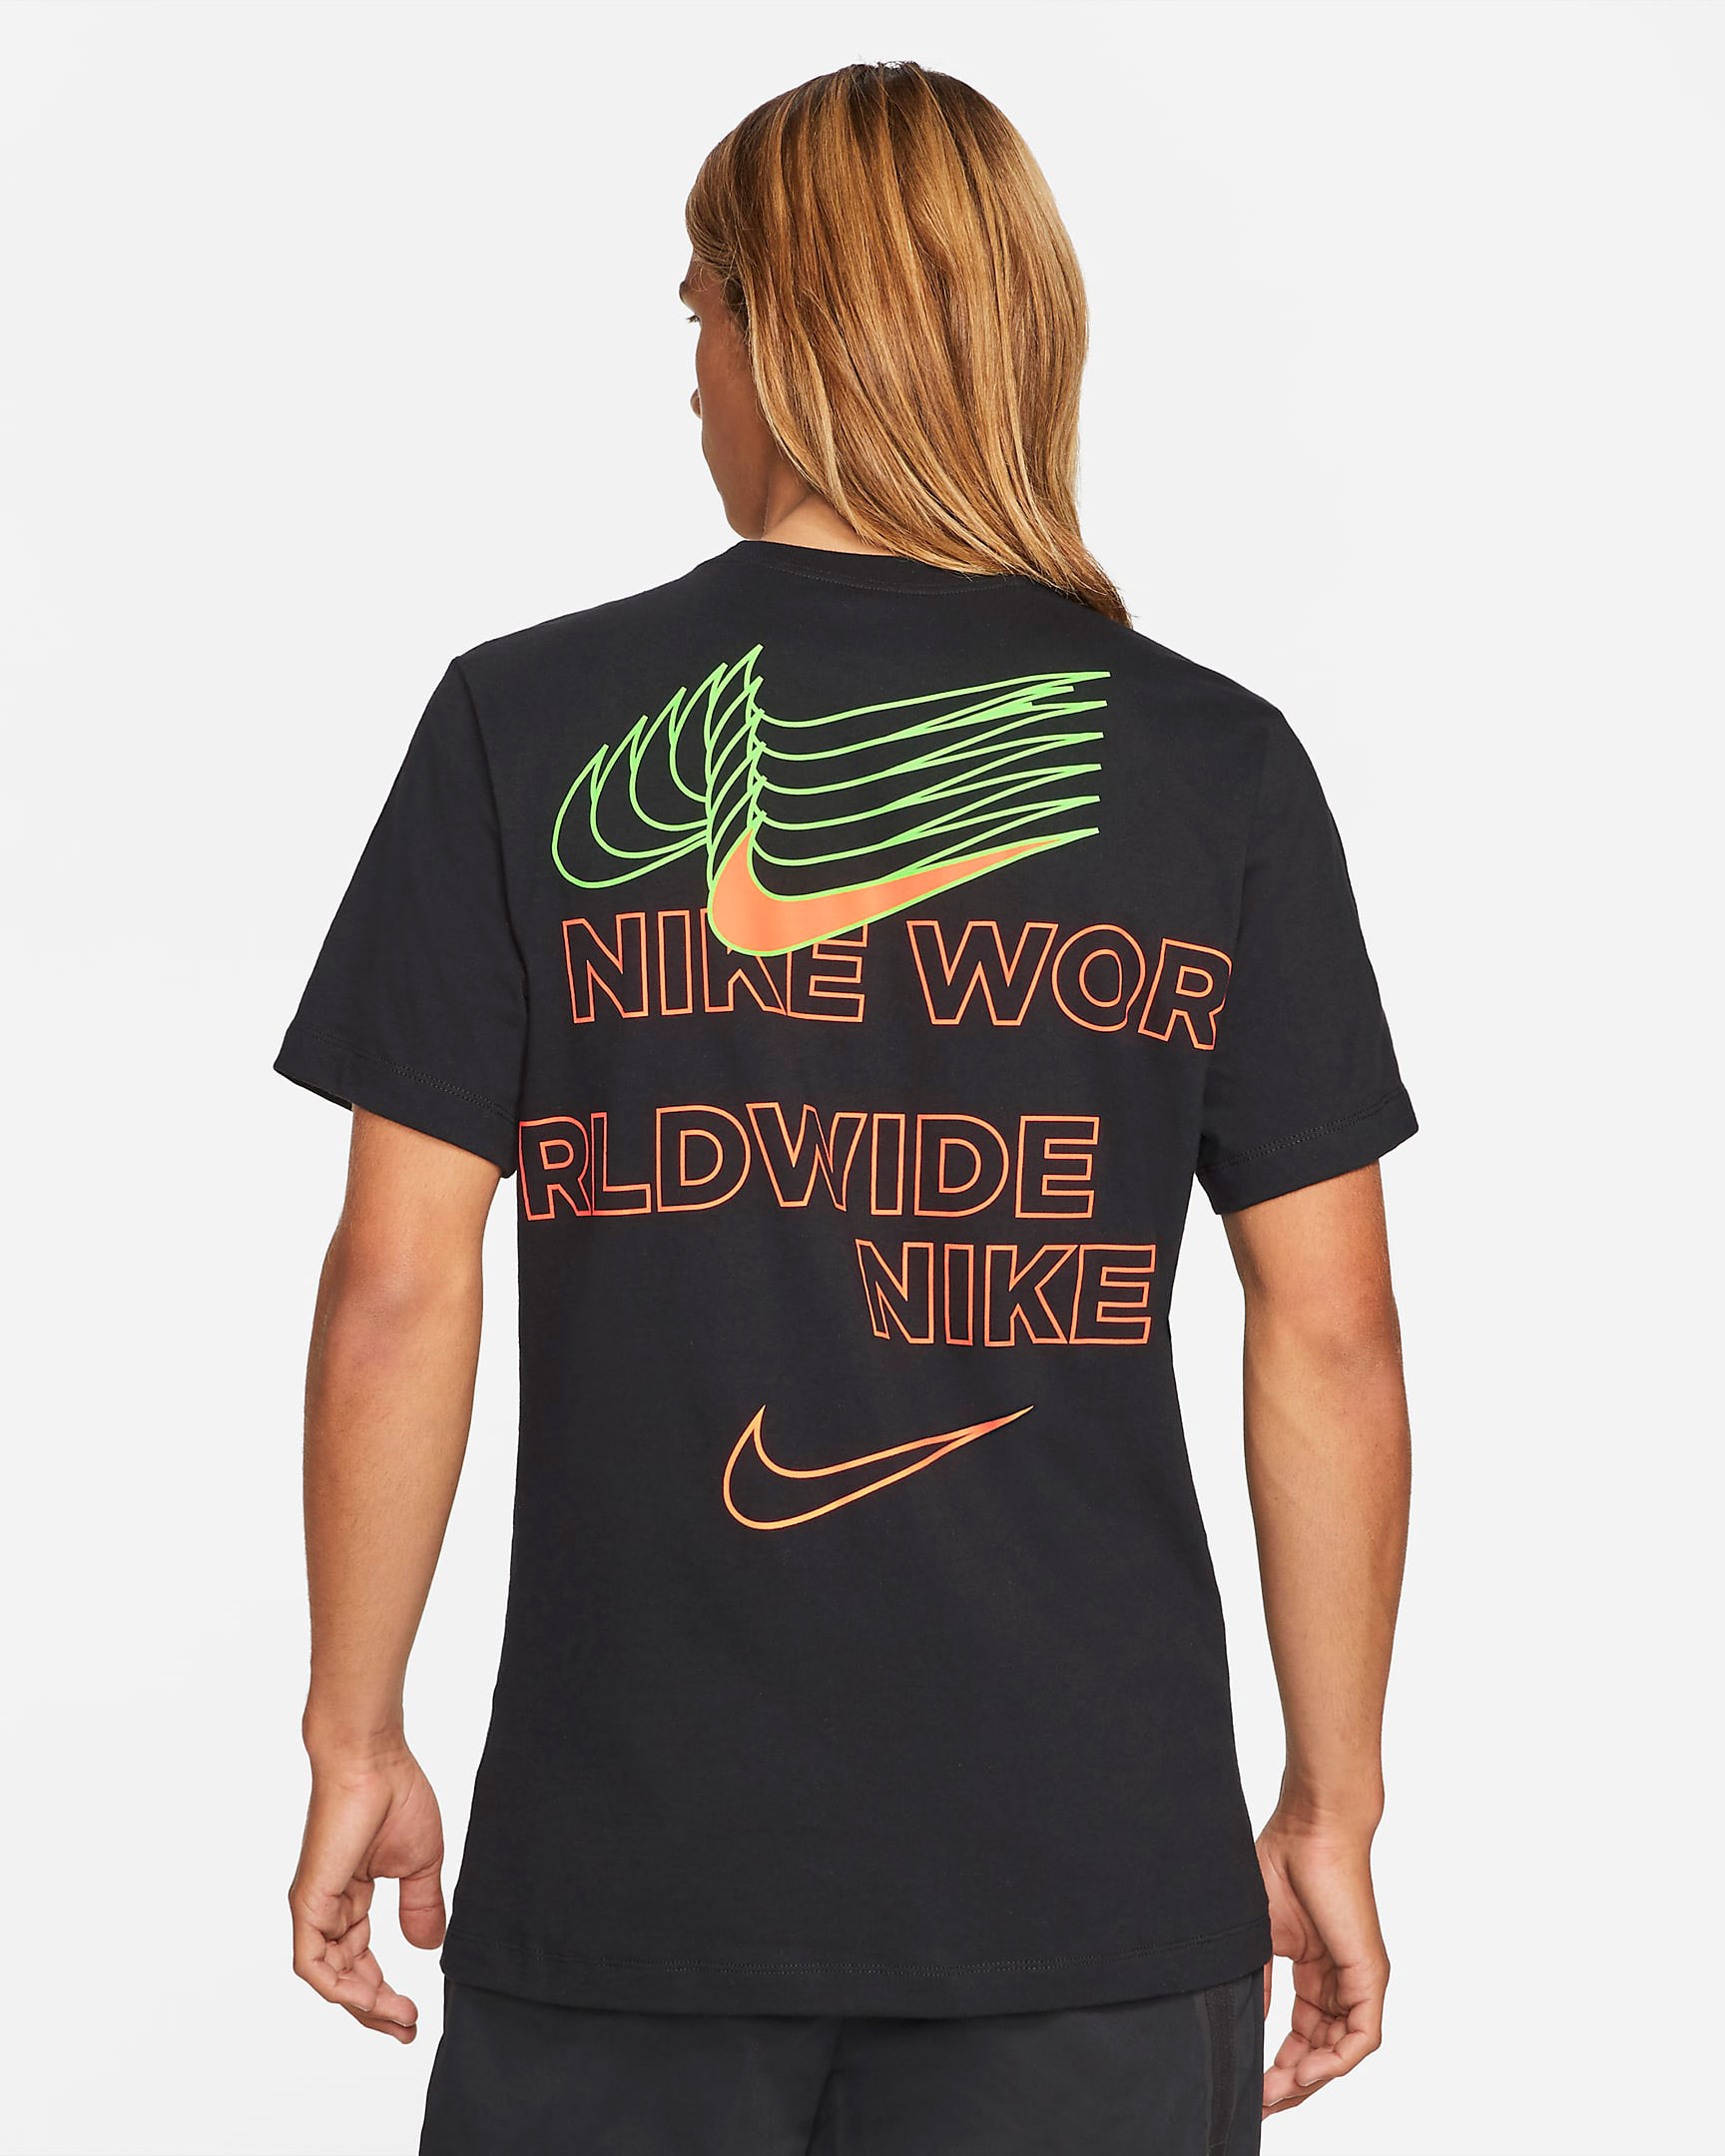 nike-worldwide-shirt-2